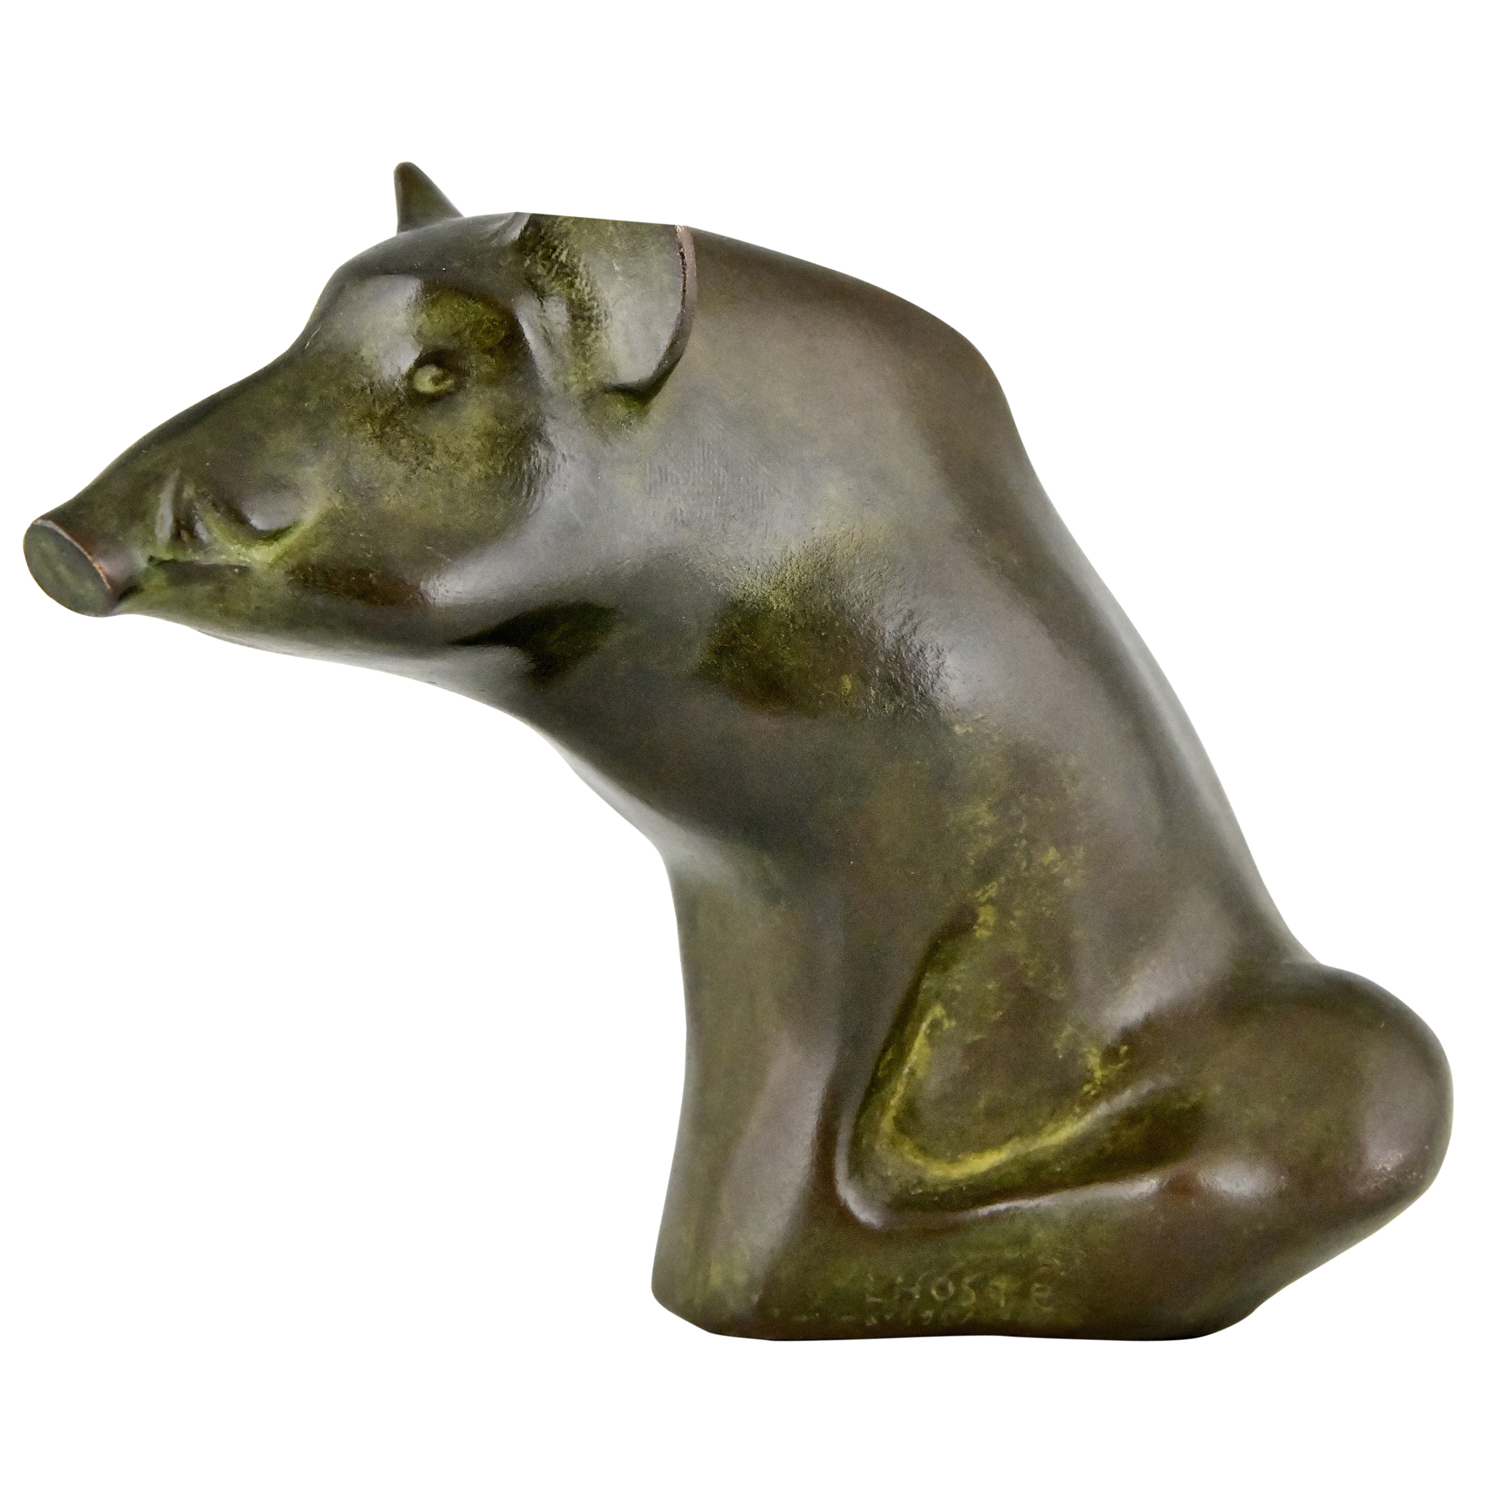 Bronze sculpture of a wild boar